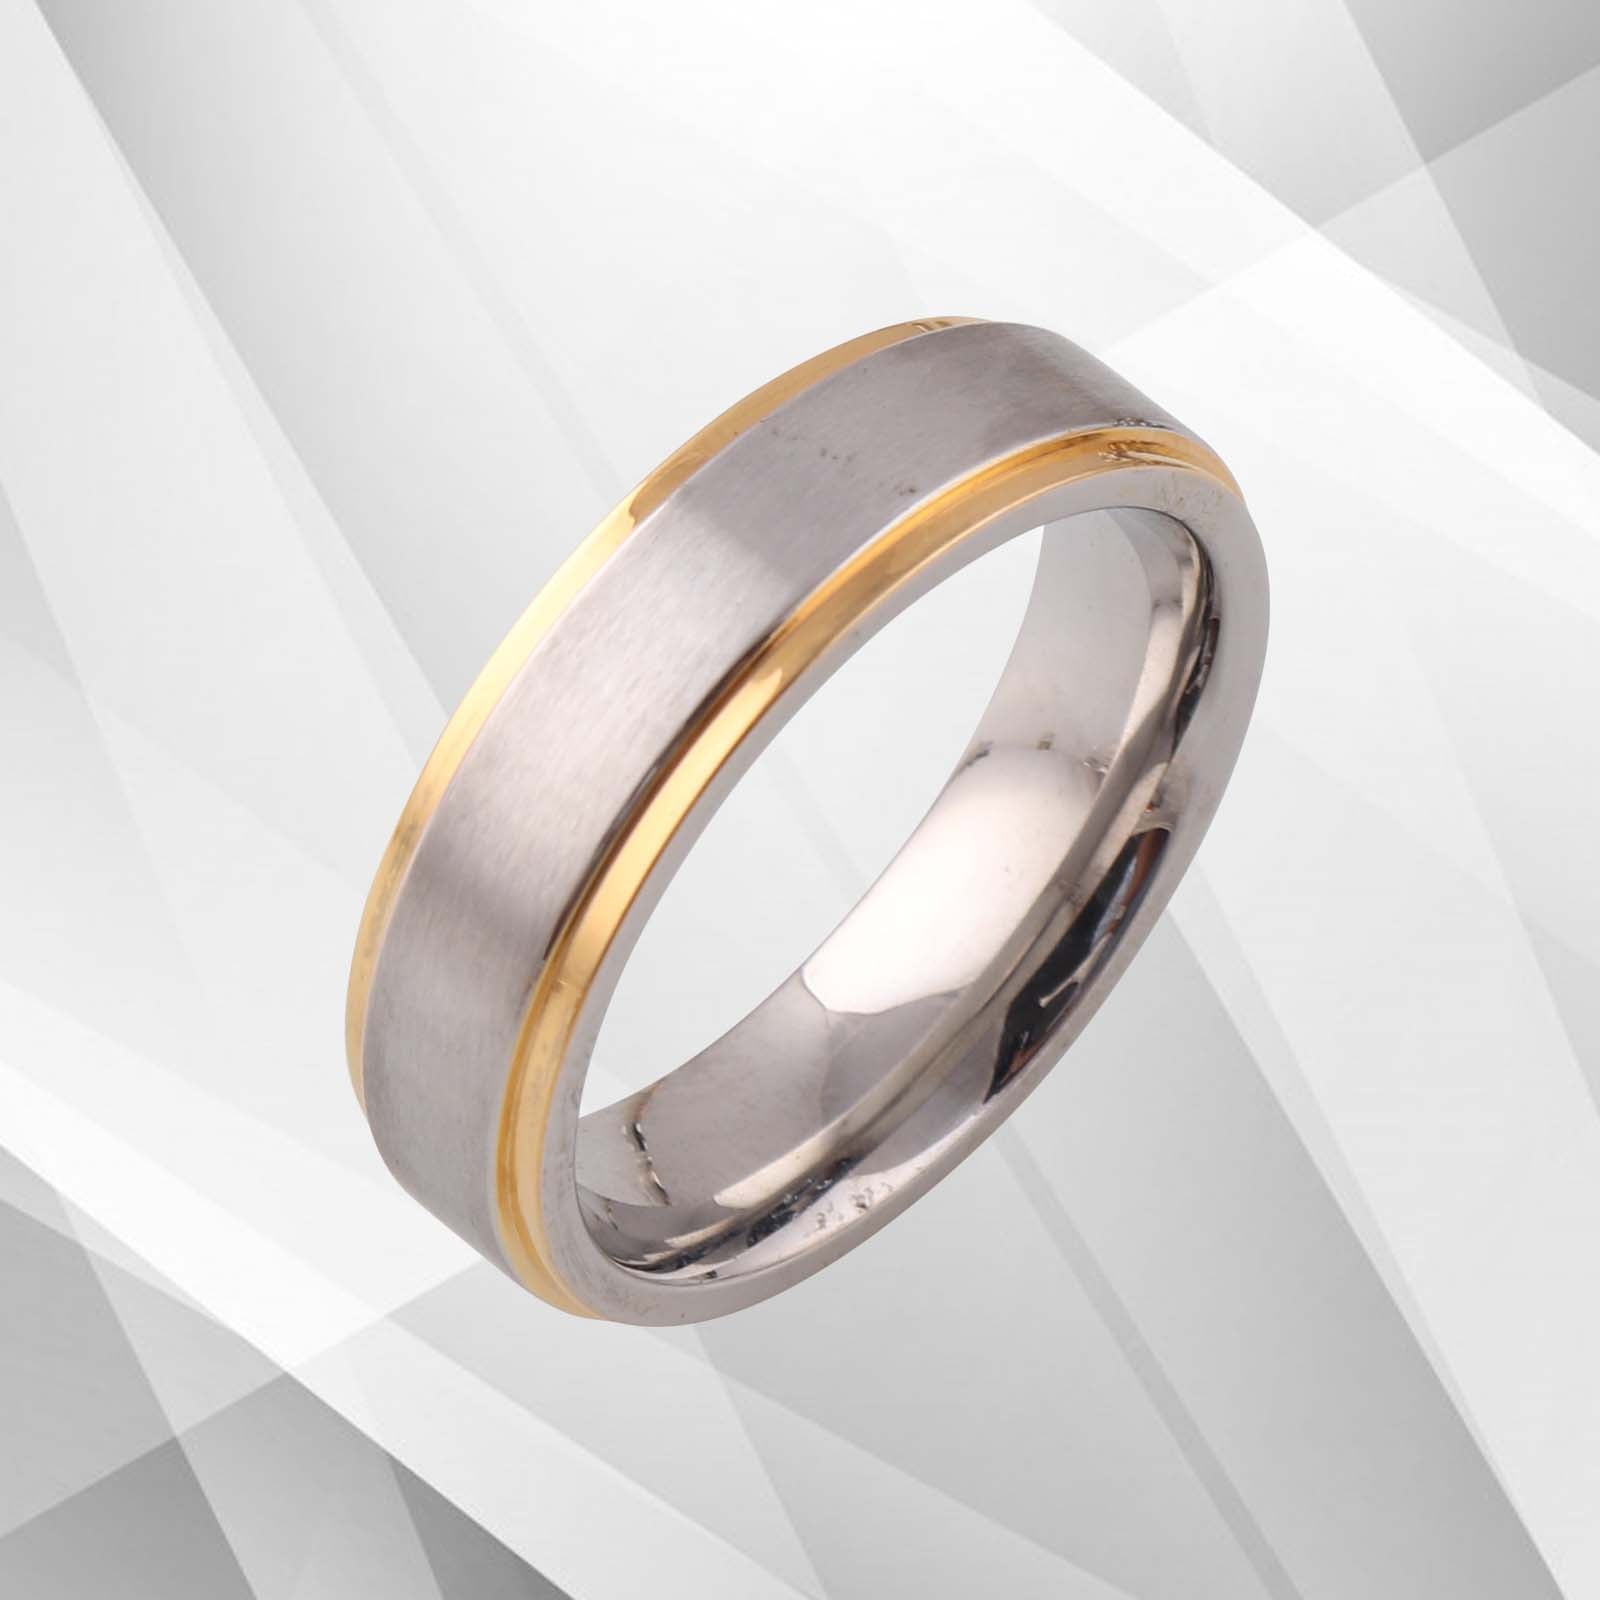 Designer Titanium Wedding Band Ring with 18Ct Yellow and White Gold Plating - 6mm Wide, Comfort Fit, Handmade - Men's Engagement Anniversary Gift (SKU: NDG1A) Bijou Her